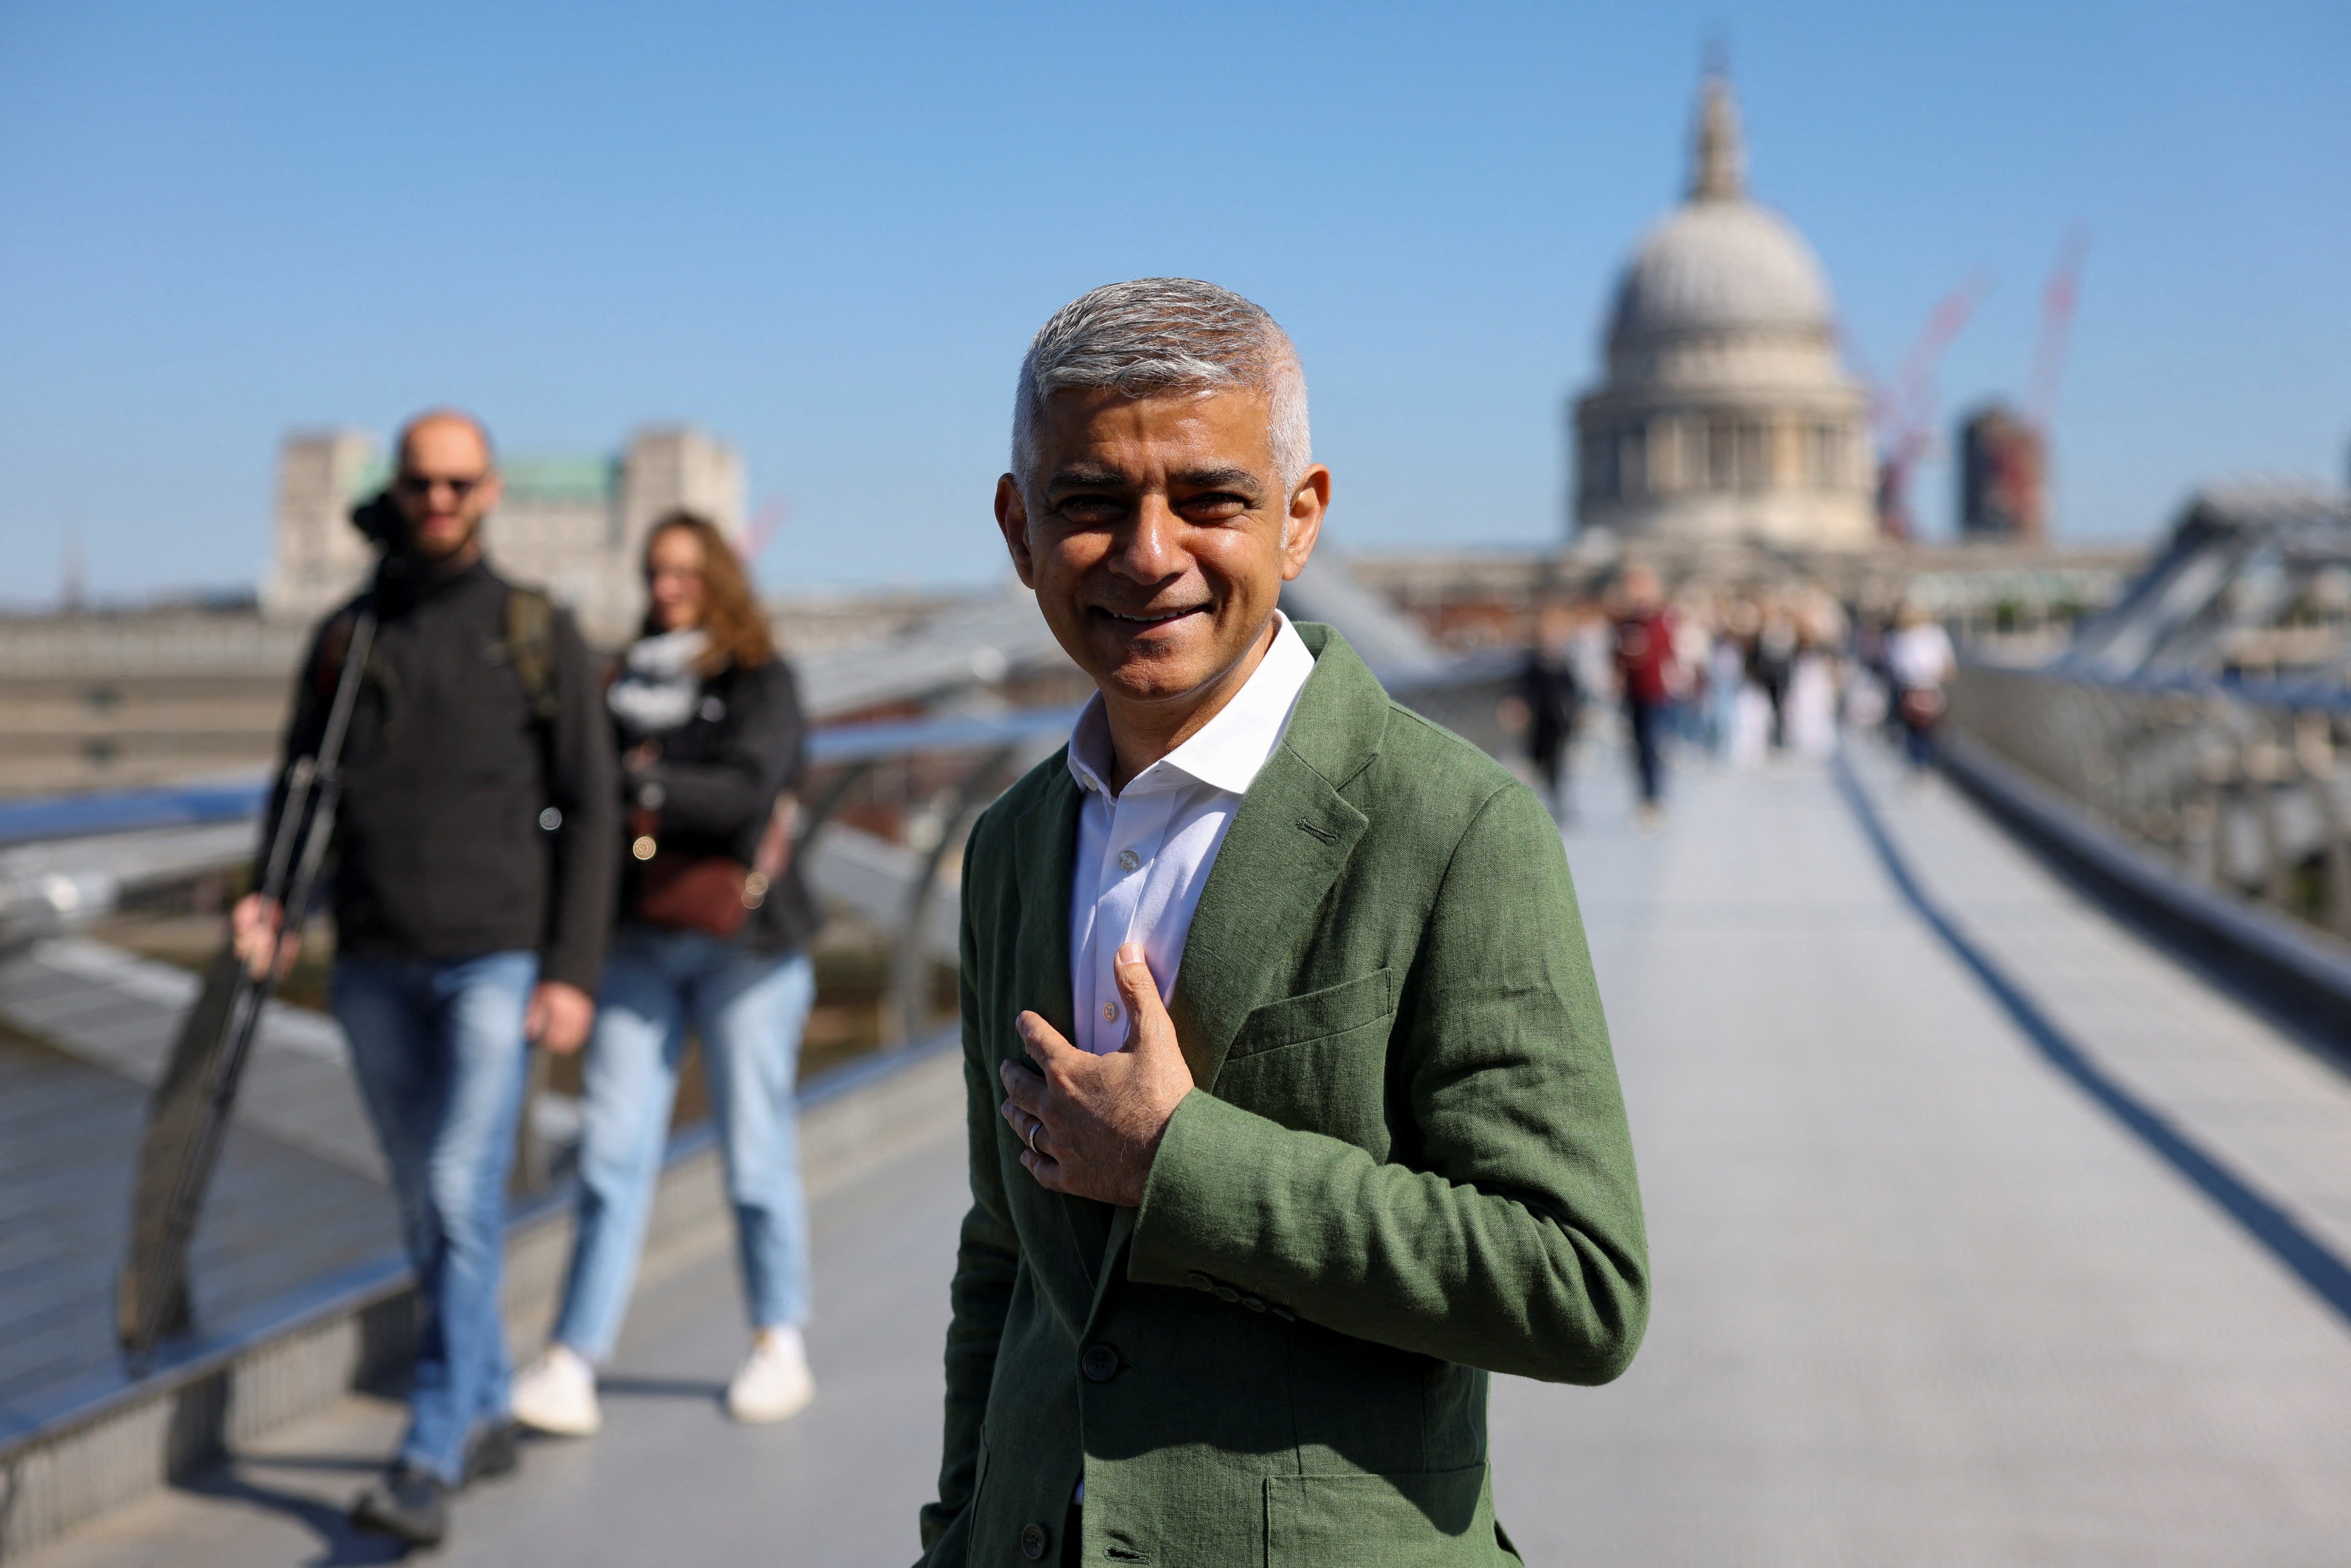 London mayor Sadiq Khan is looking forward to welcoming Taylor Swift